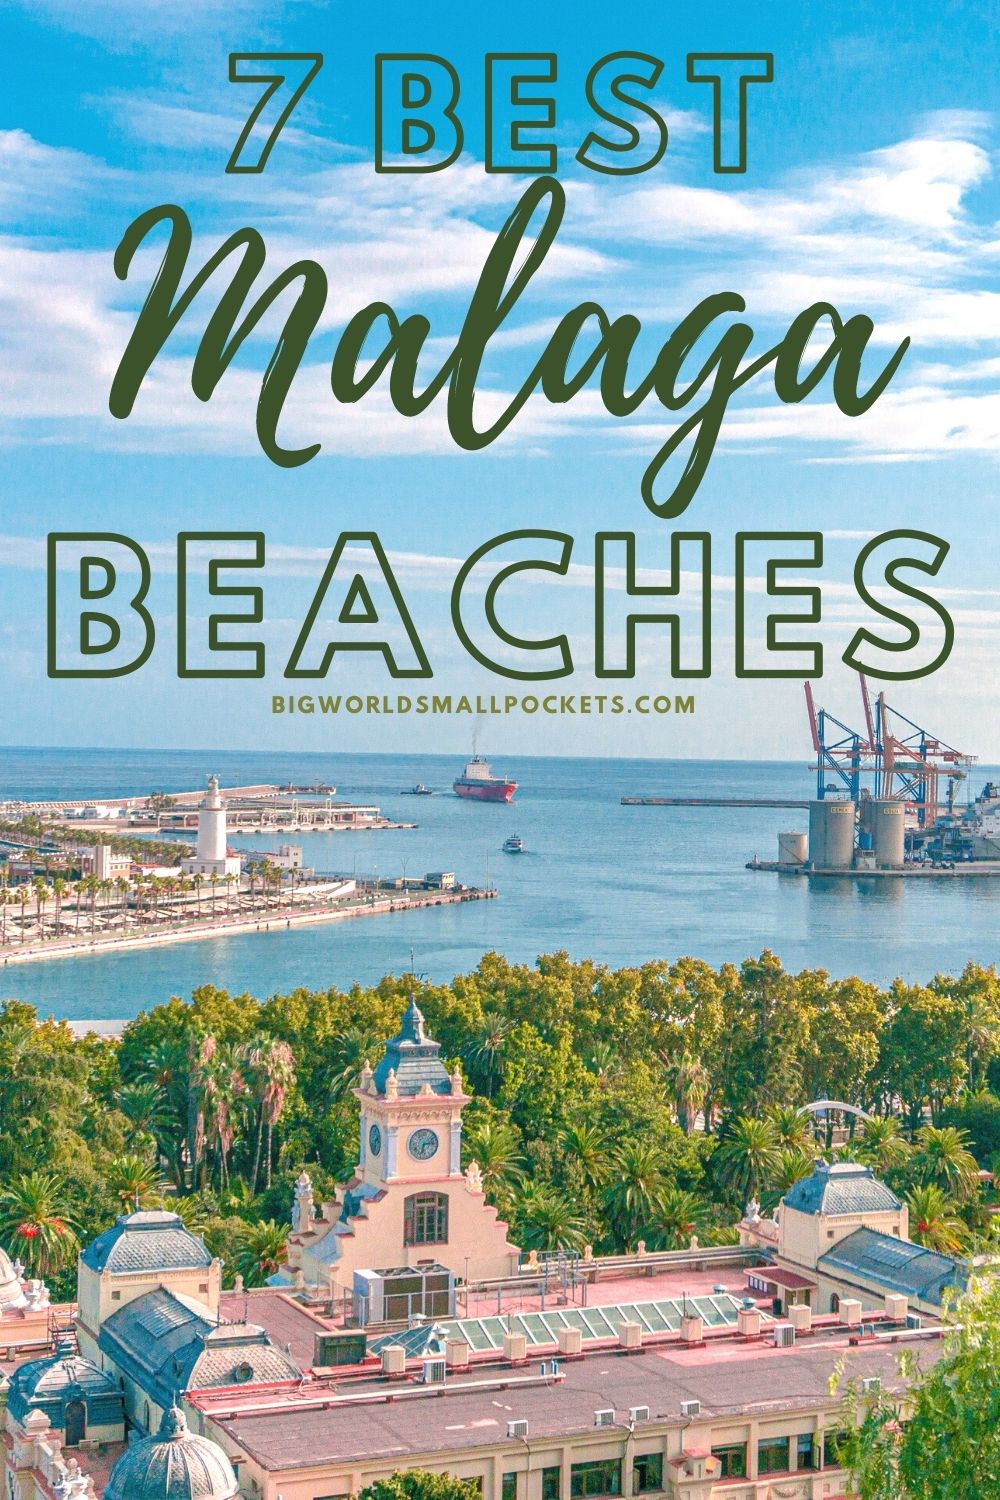 The 7 Best Beaches in Malaga, Spain